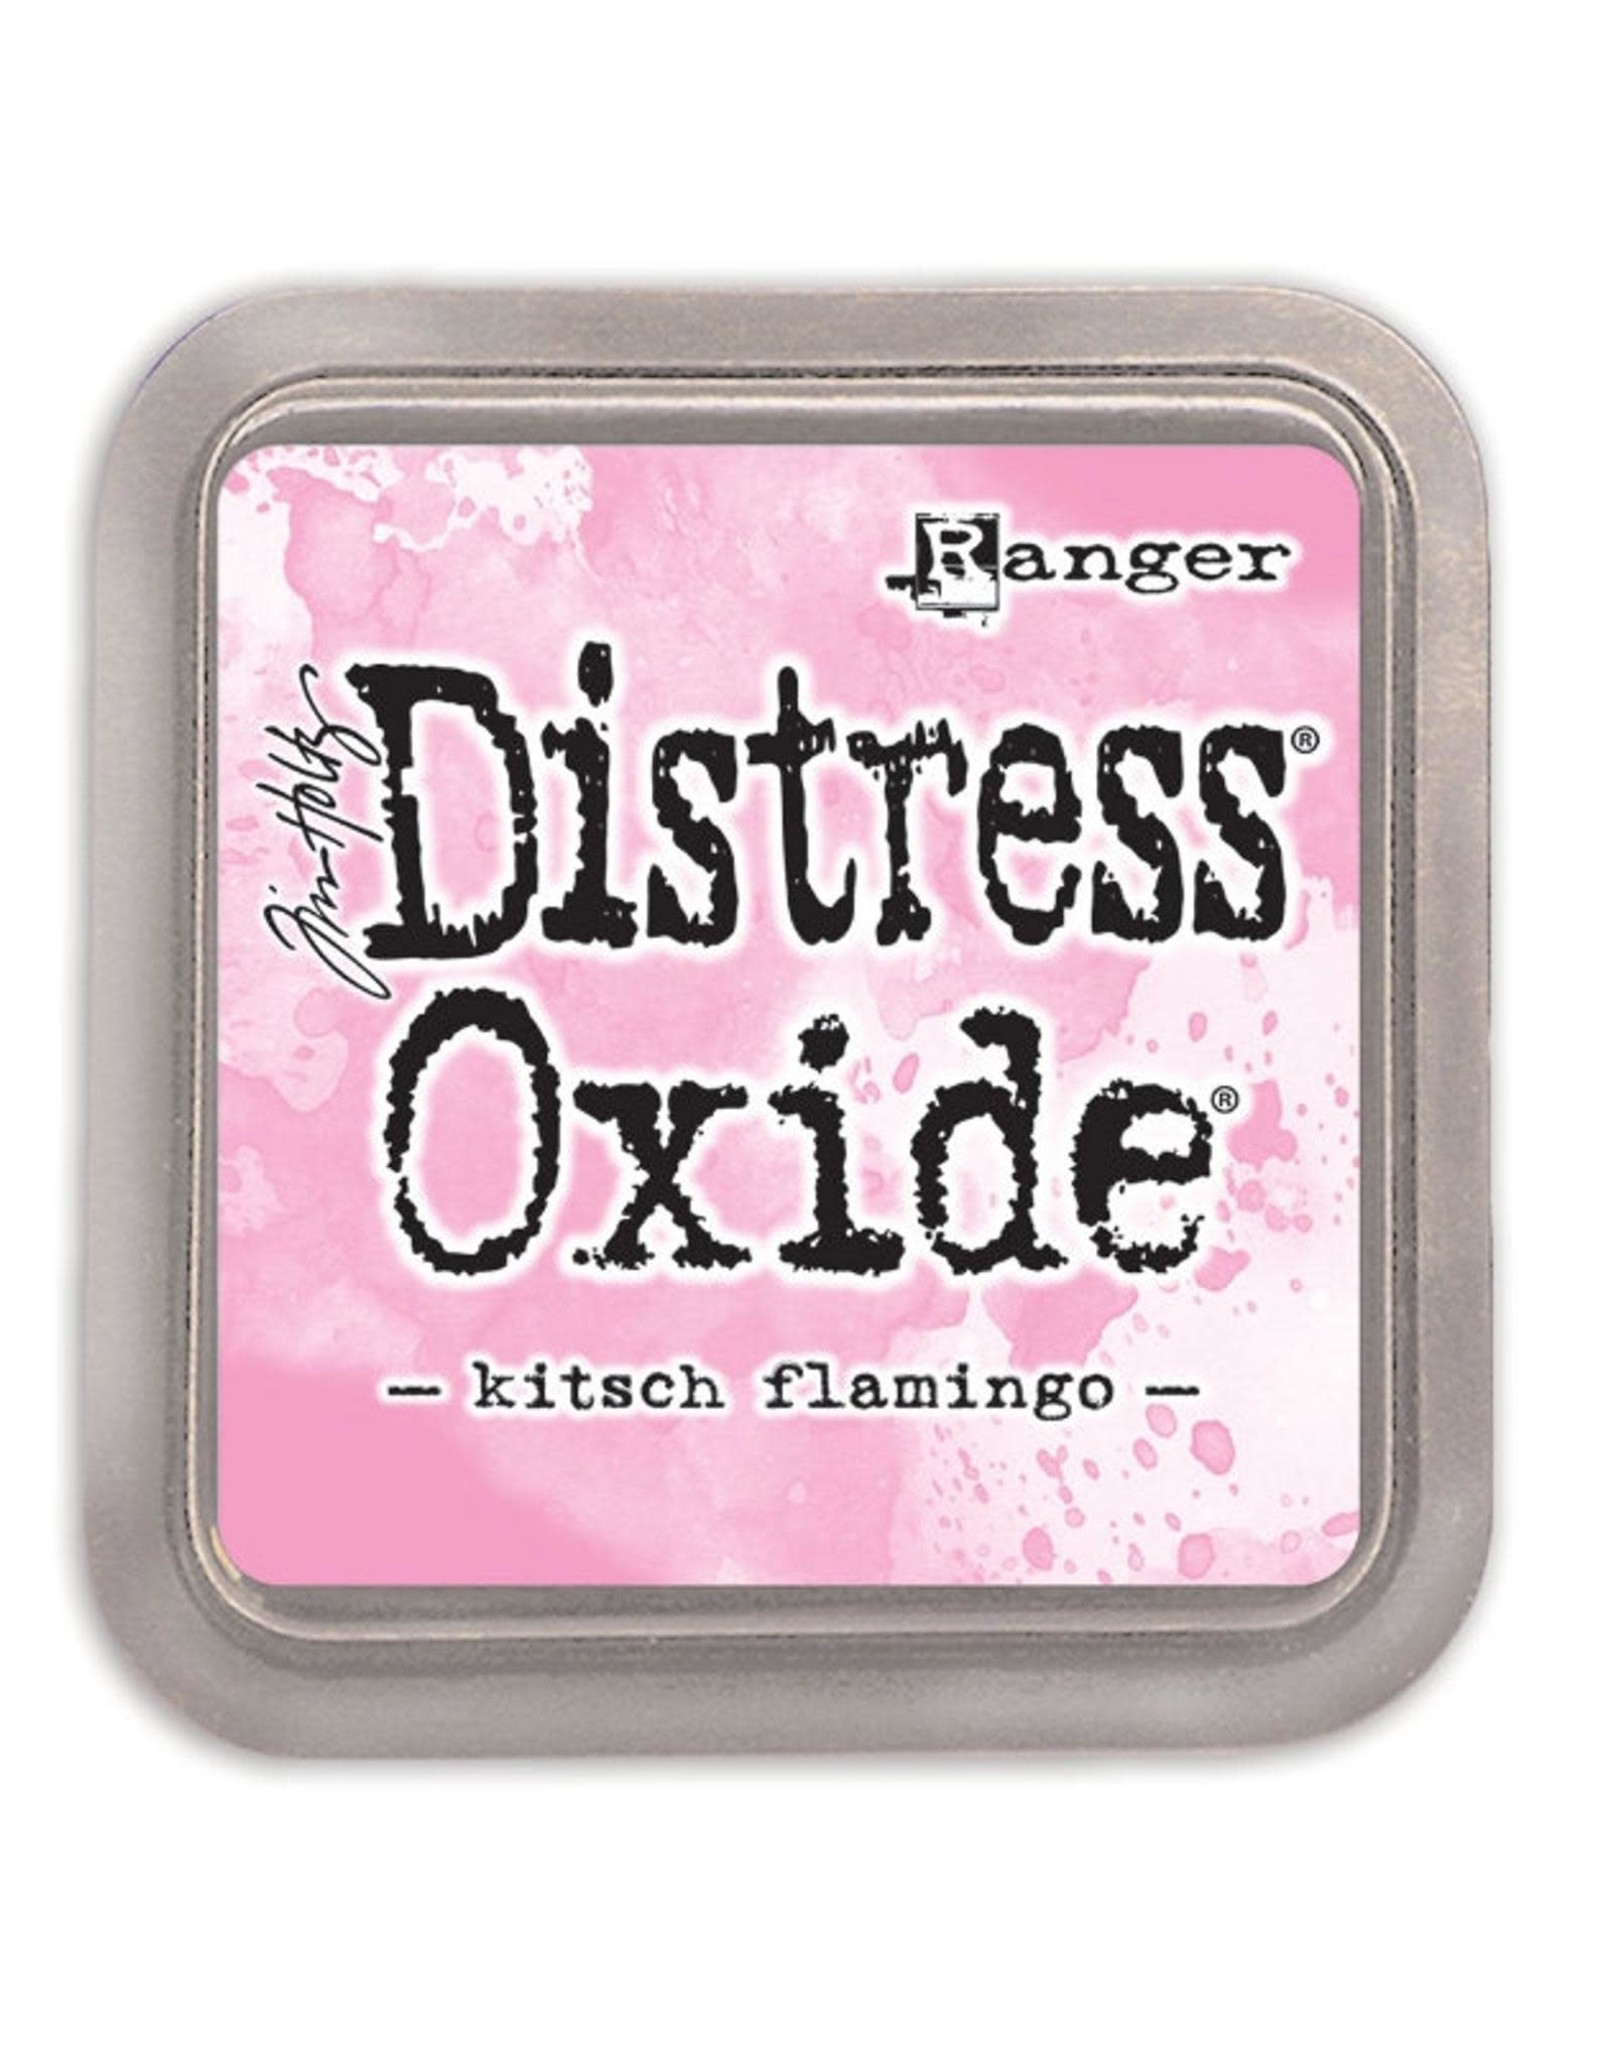 Tim Holtz - Ranger Distress Oxide Kitch Flamingo